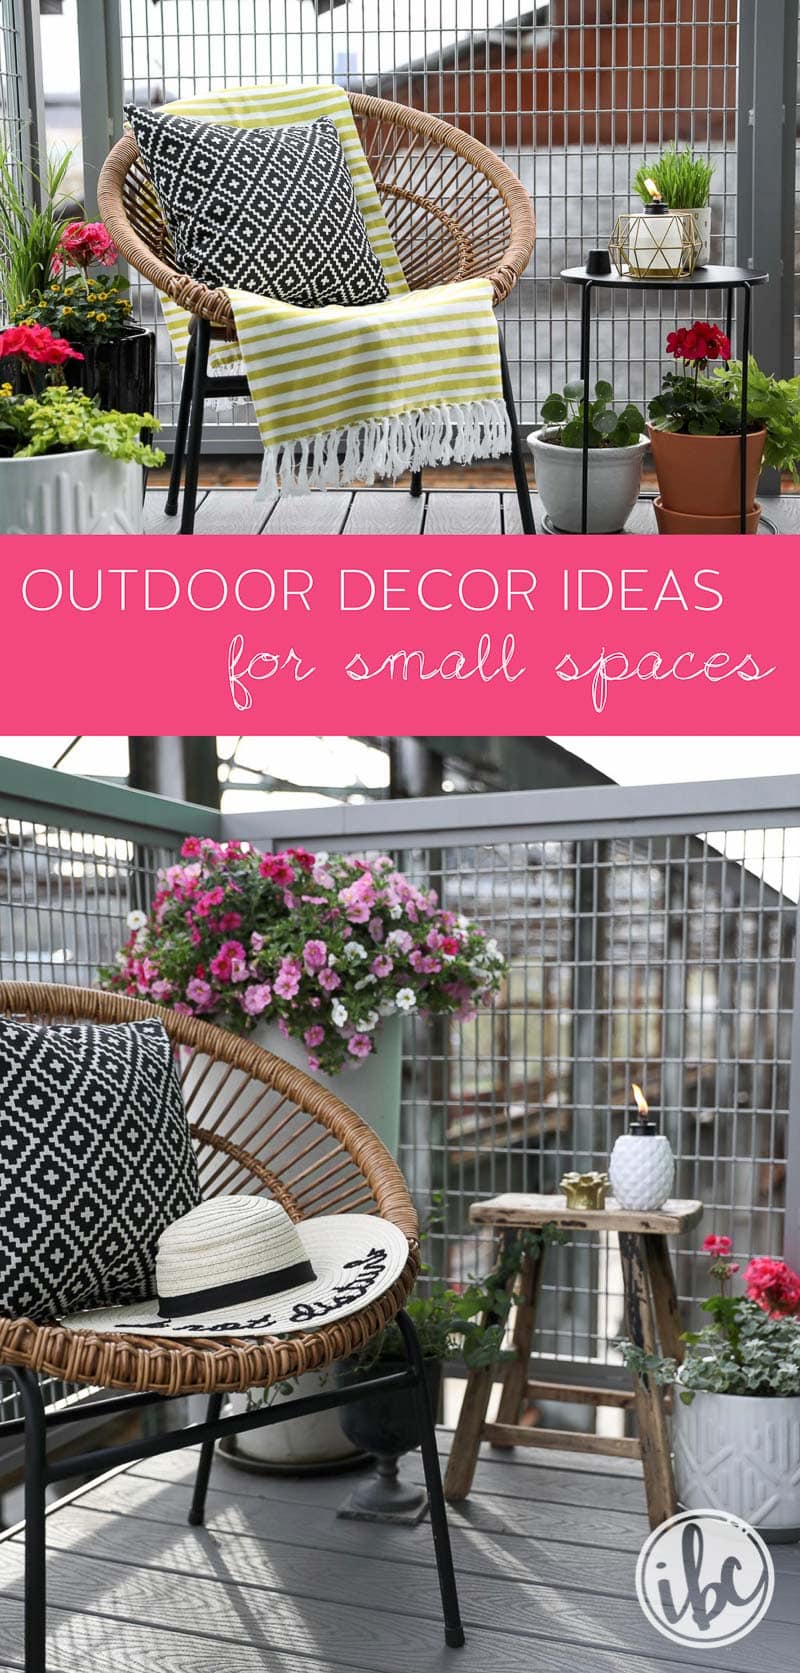 Ideas for decorating an apartment balcony. #outdoor #apartment #balcony #decor